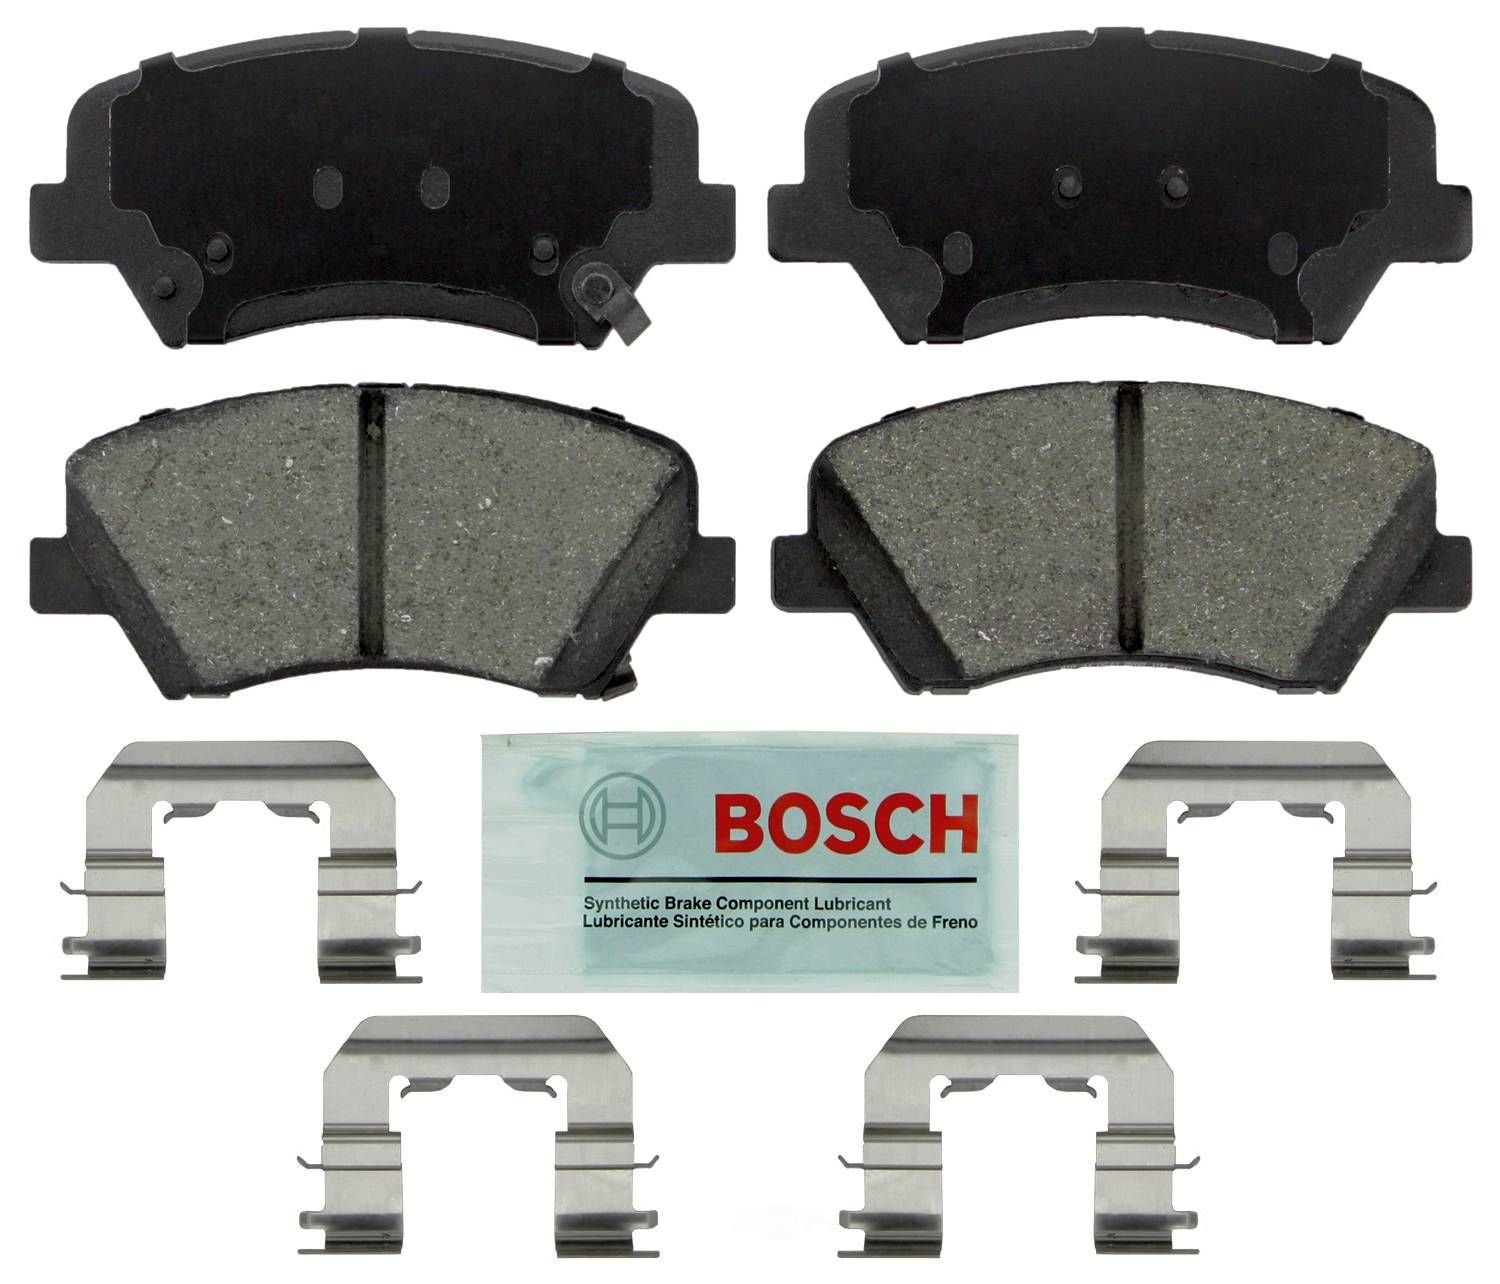 BOSCH BRAKE - Bosch Blue Ceramic Brake Pads with Hardware (Front) - BQC BE1543H